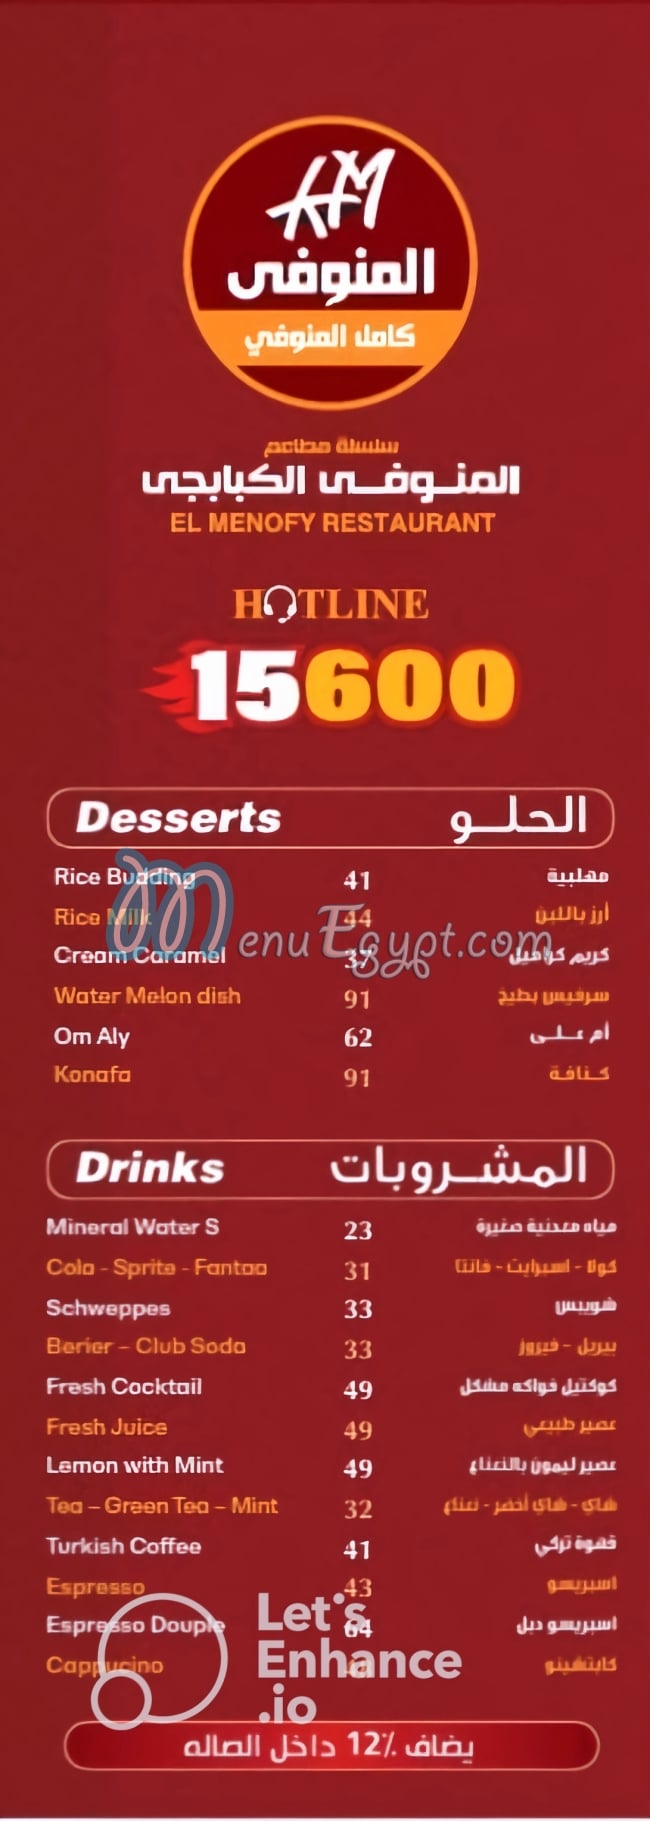 Kamel El Menofy menu